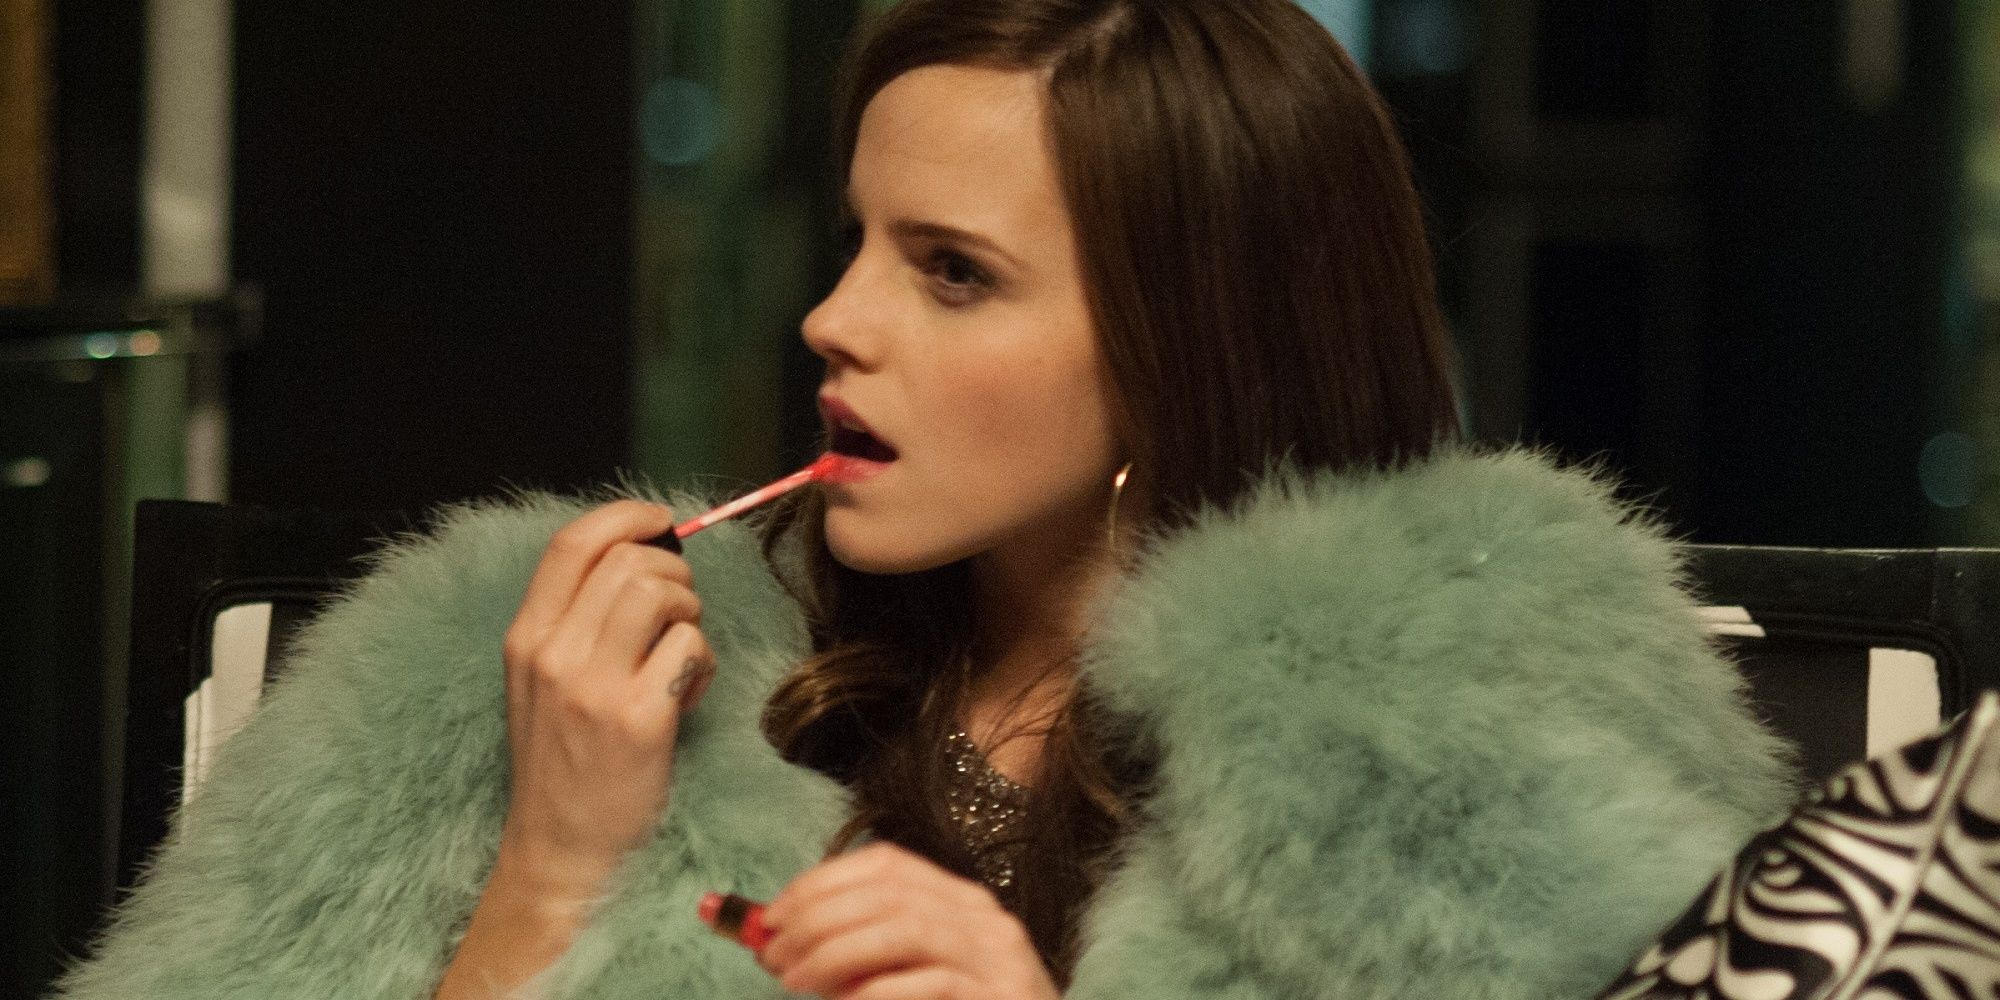 Emma Watson applying lipgloss in The Bling Ring.